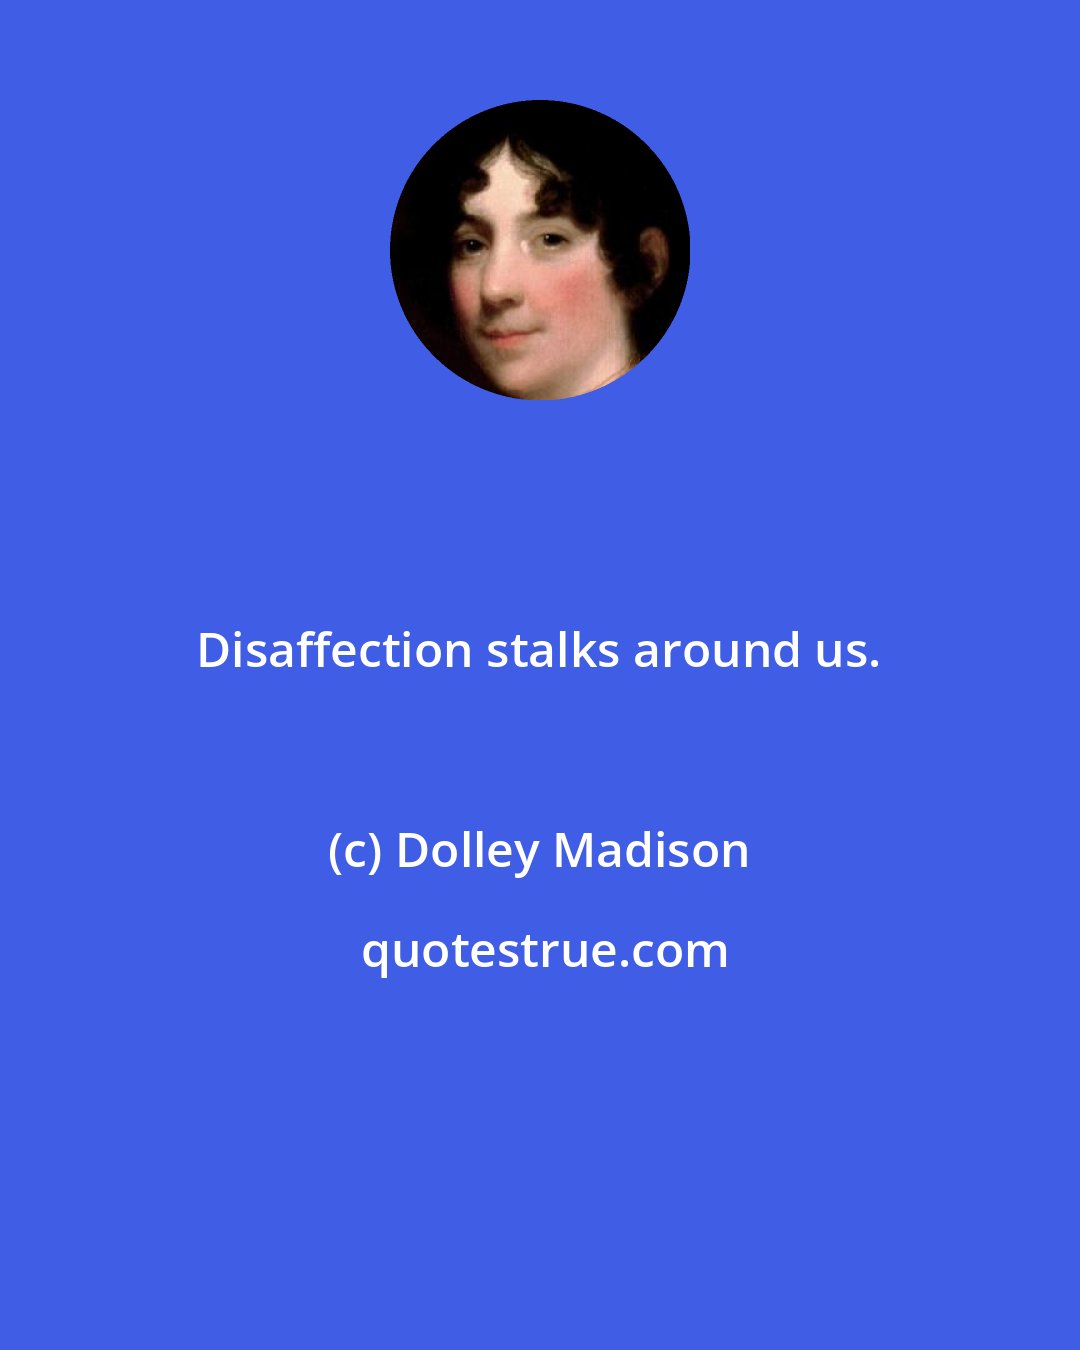 Dolley Madison: Disaffection stalks around us.